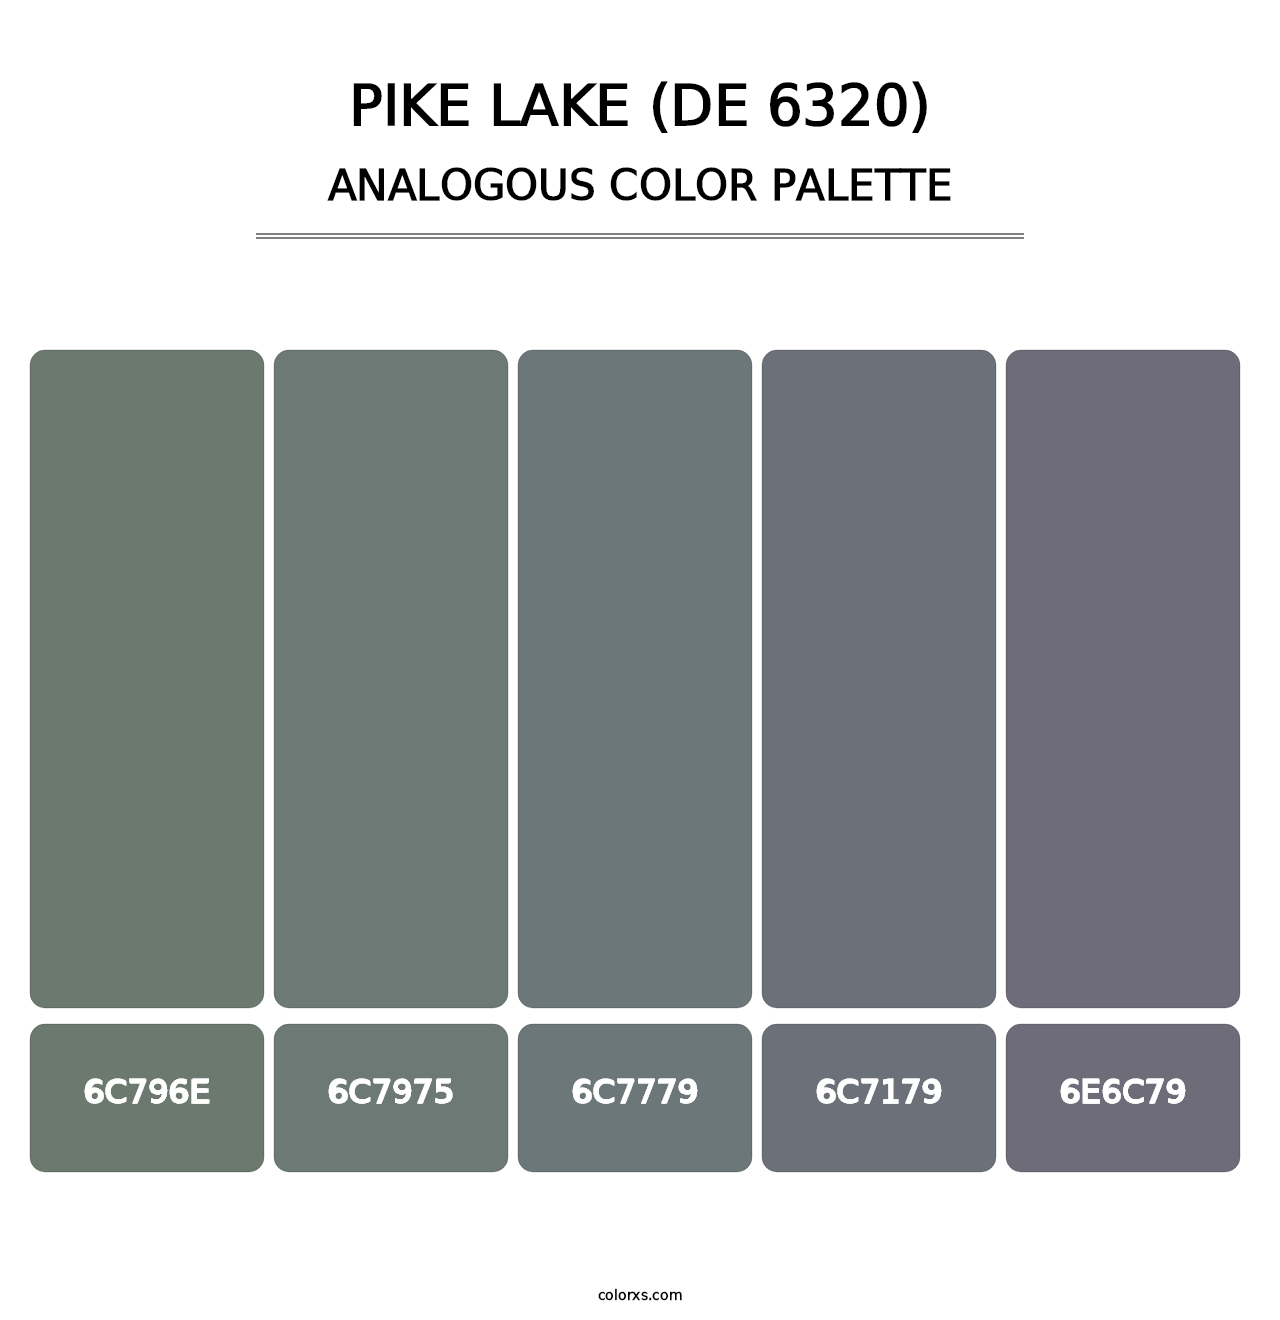 Pike Lake (DE 6320) - Analogous Color Palette